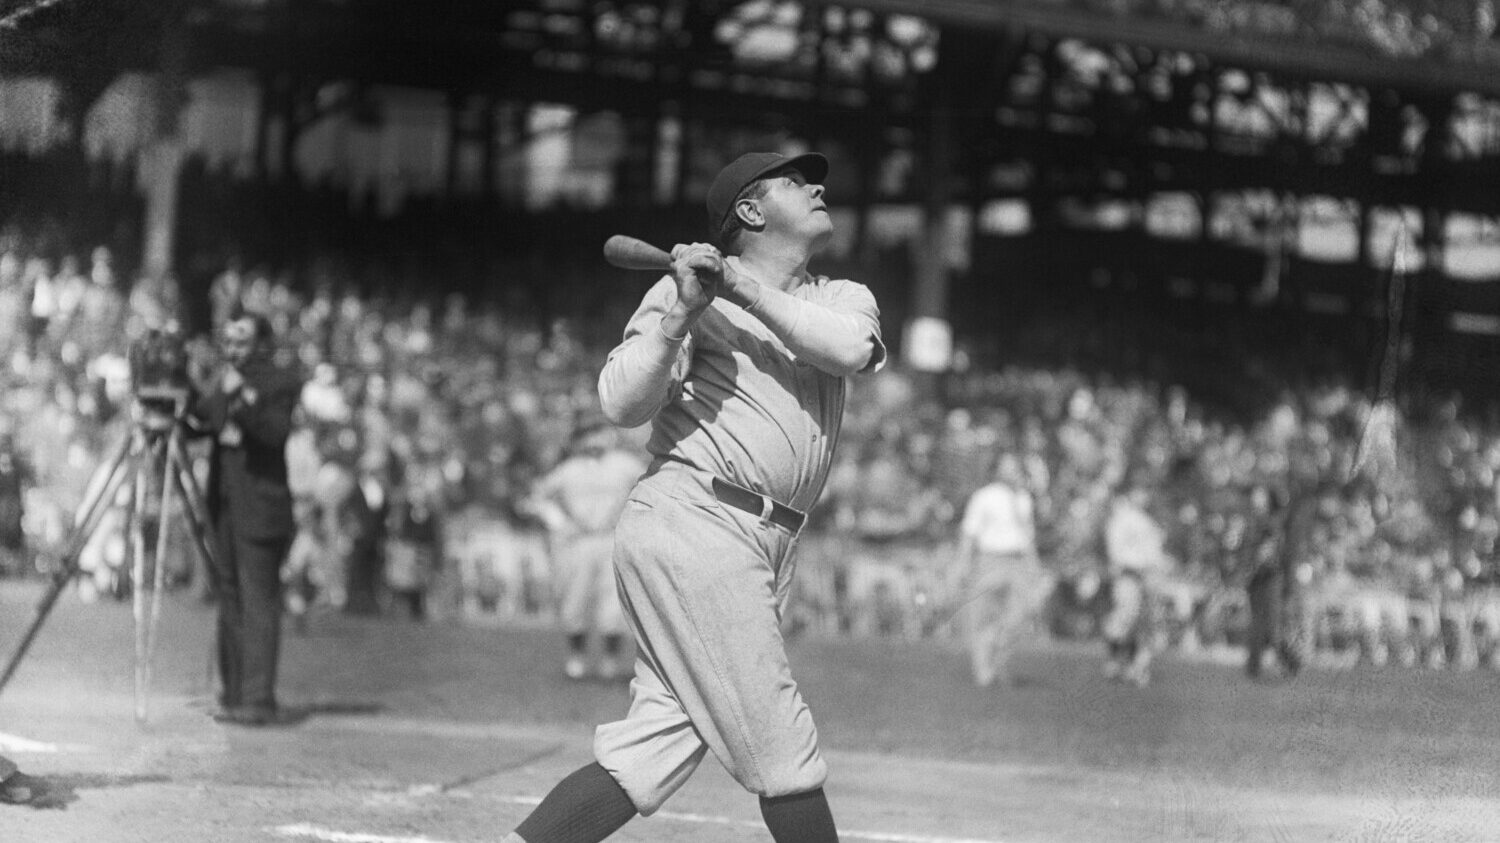 Babe Ruth baseball bat sells for $930,000 as sports memorabilia